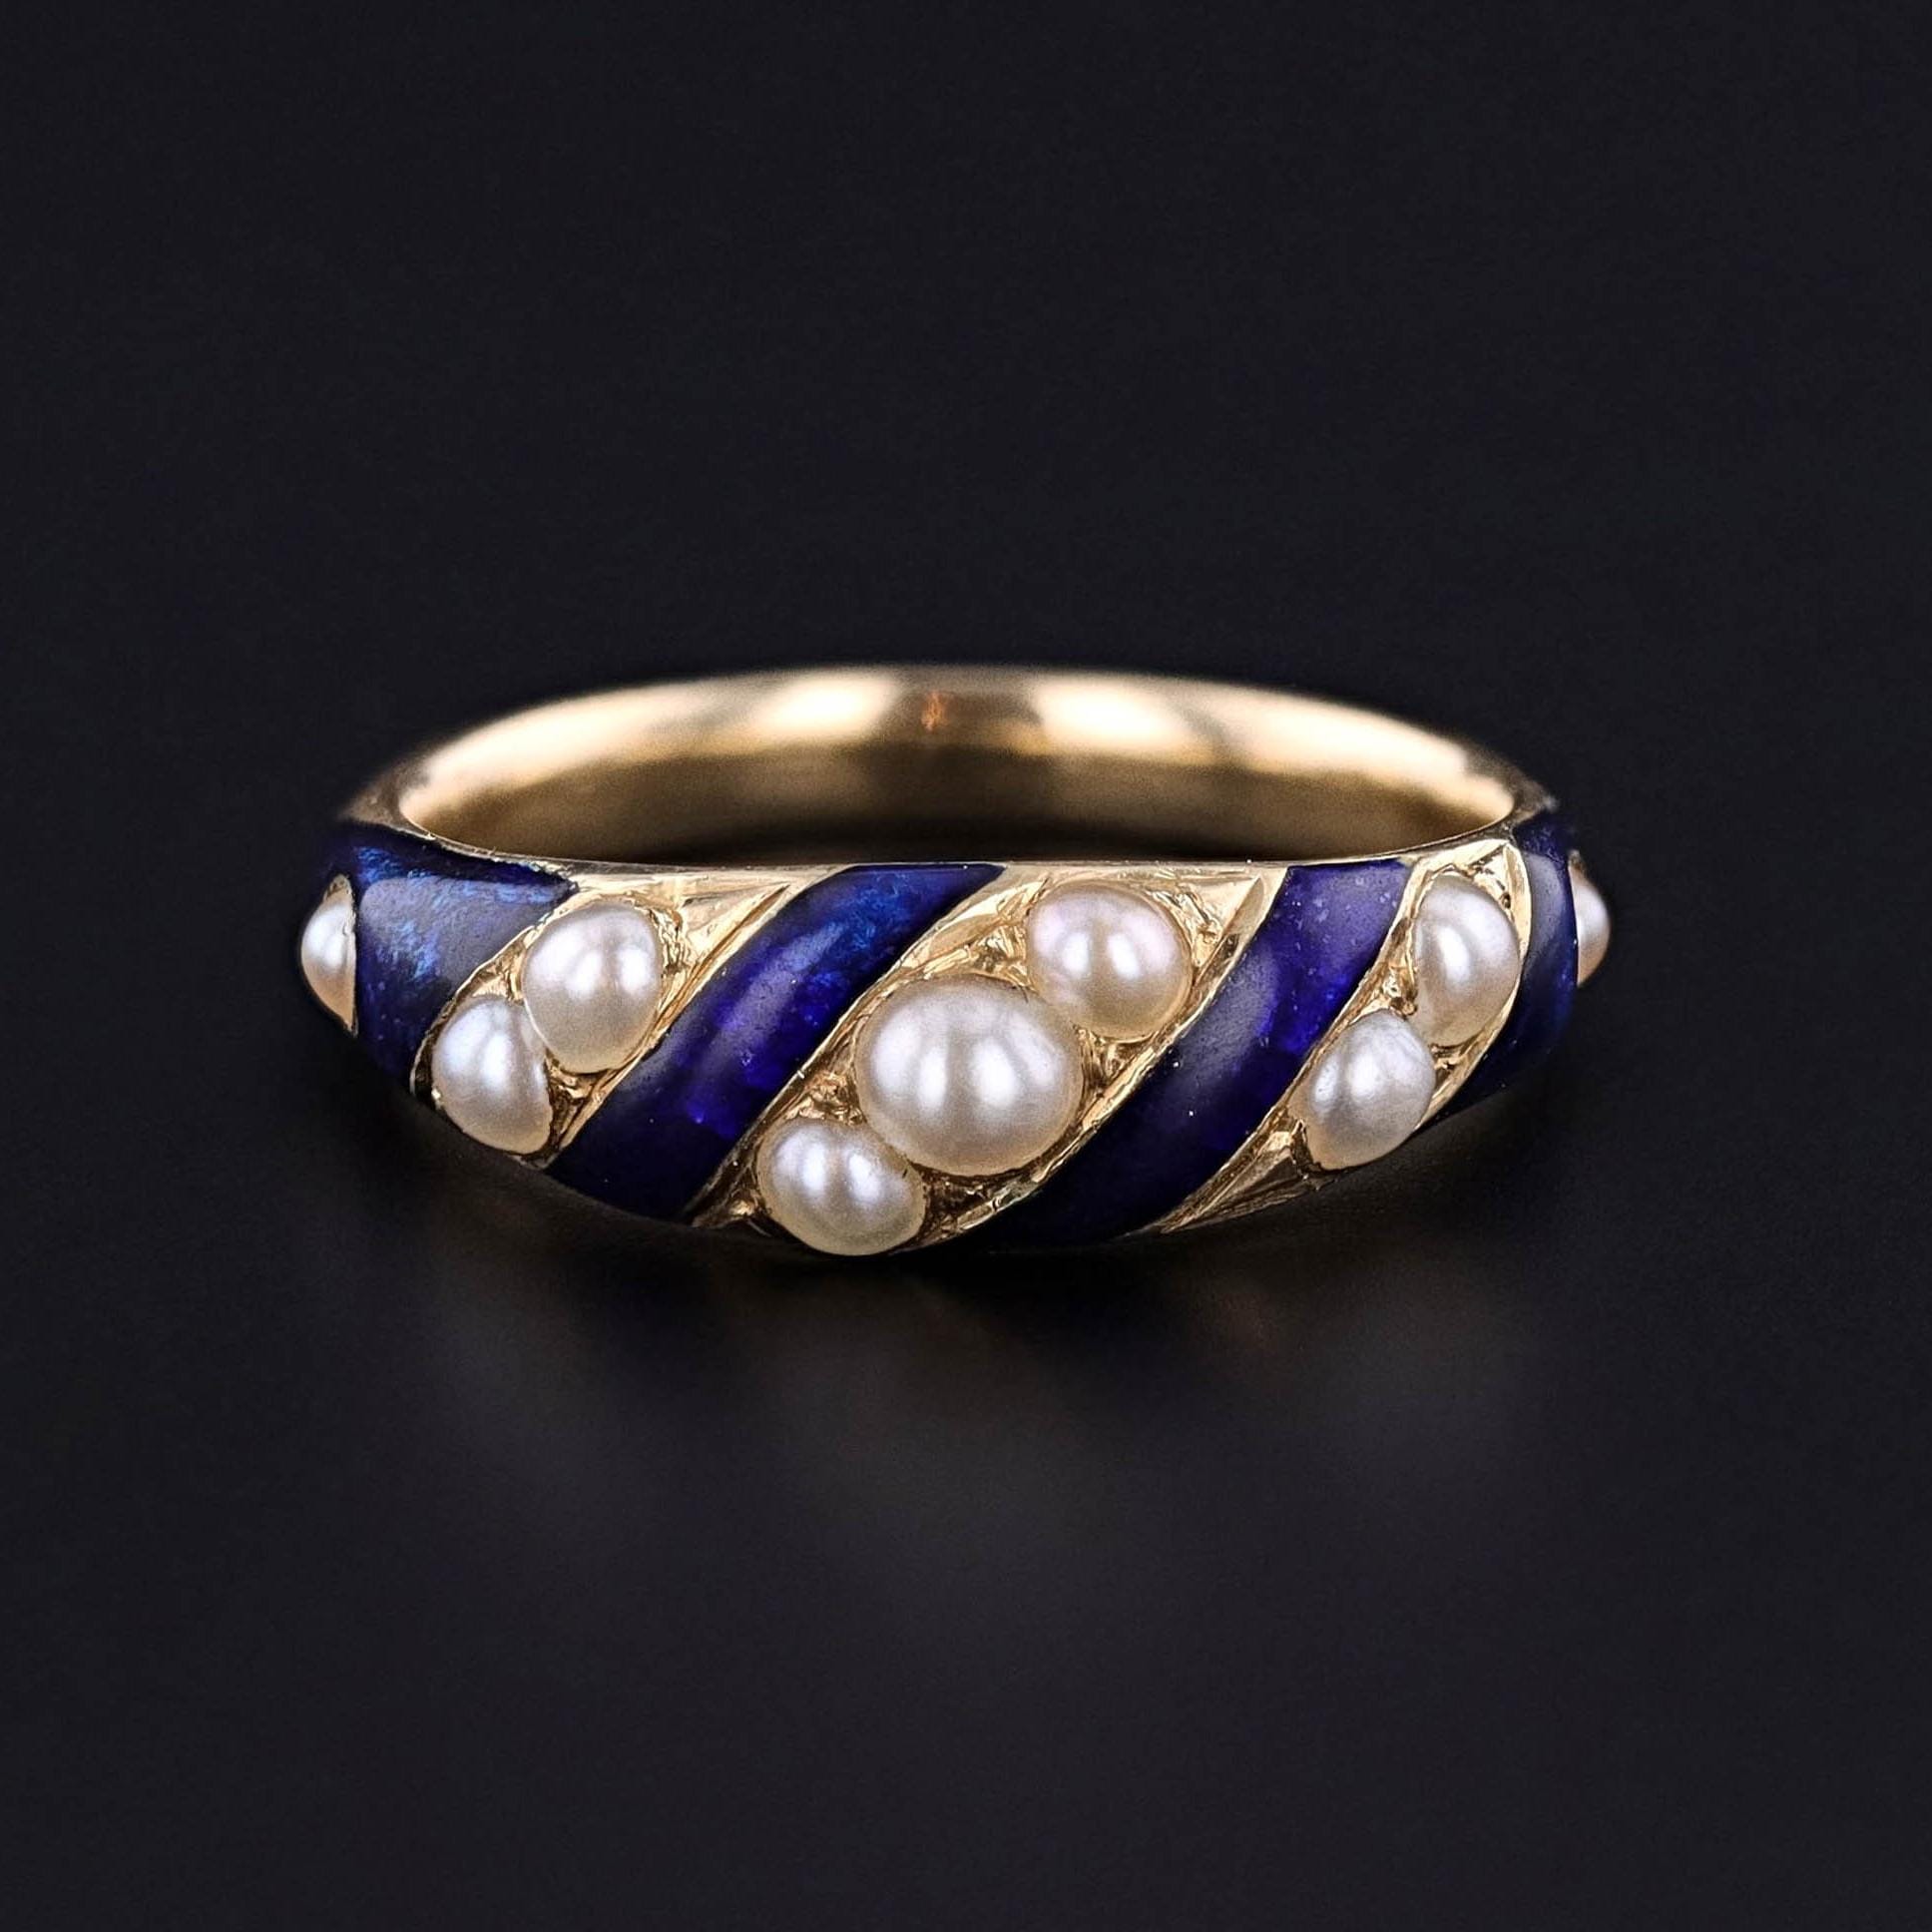 Antique Blue Enamel & Pearl Locket Ring of 18k Gold